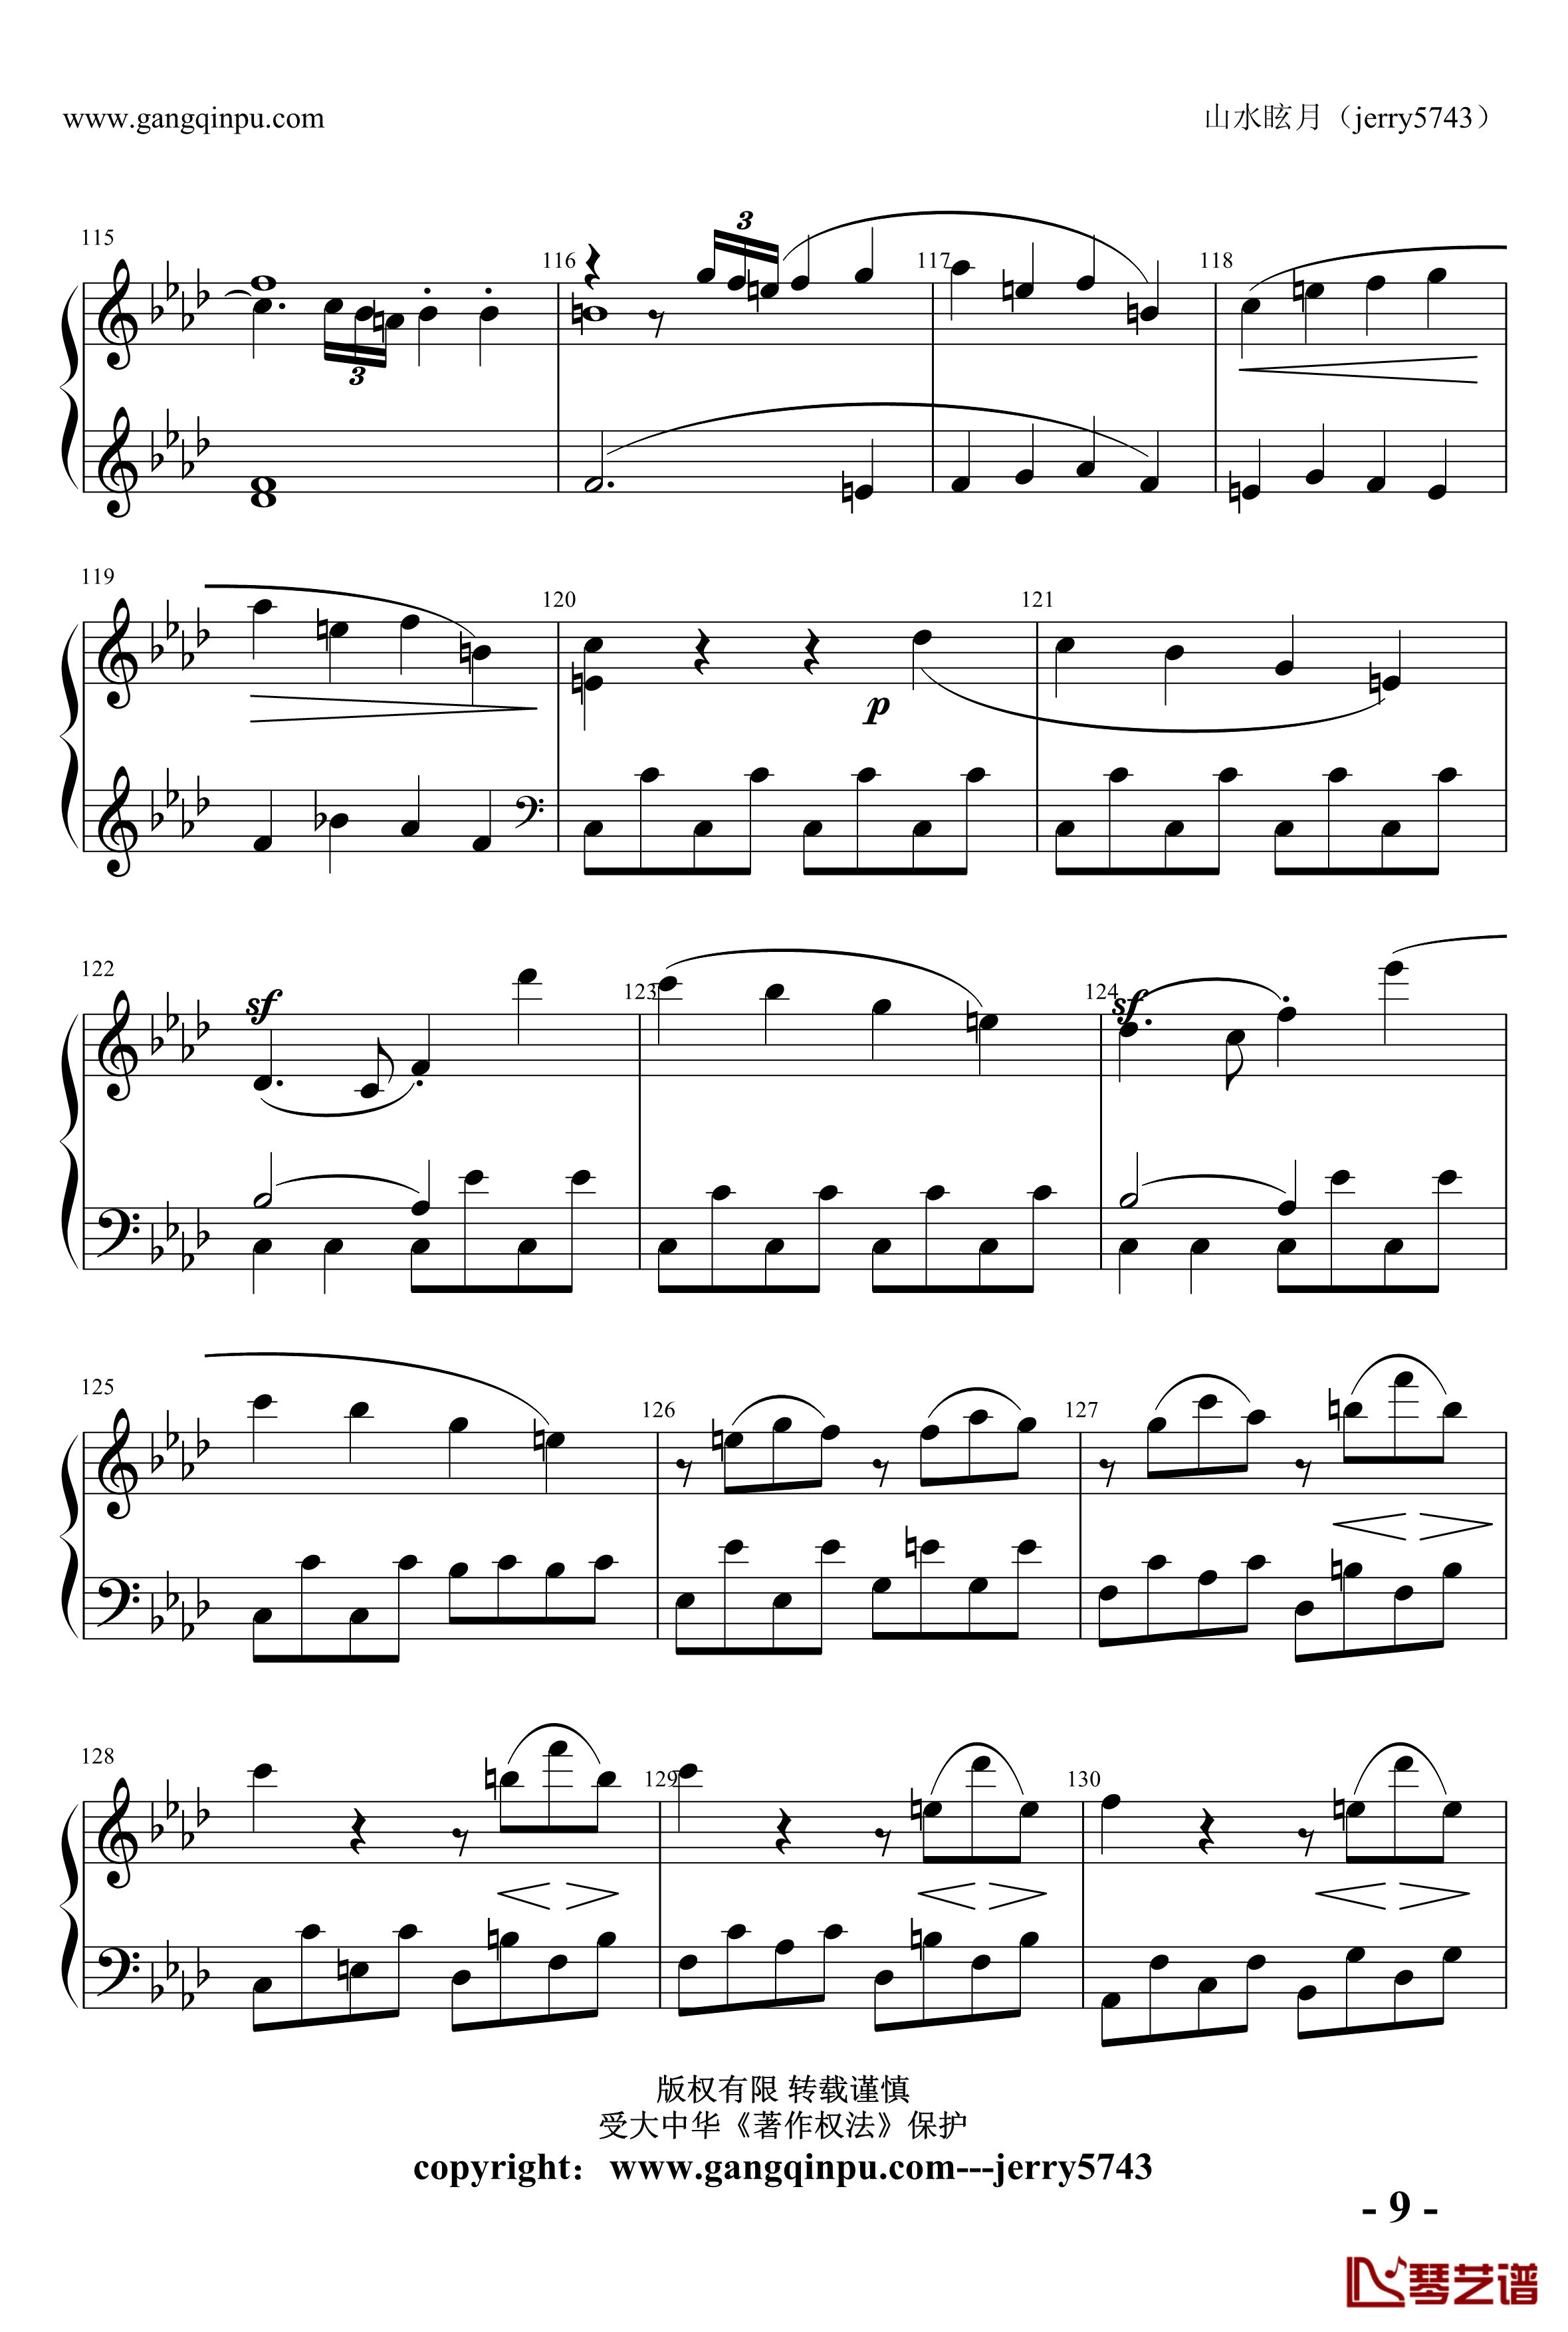 Piano Sonata No 1 part 1钢琴谱-贝多芬-beethoven9